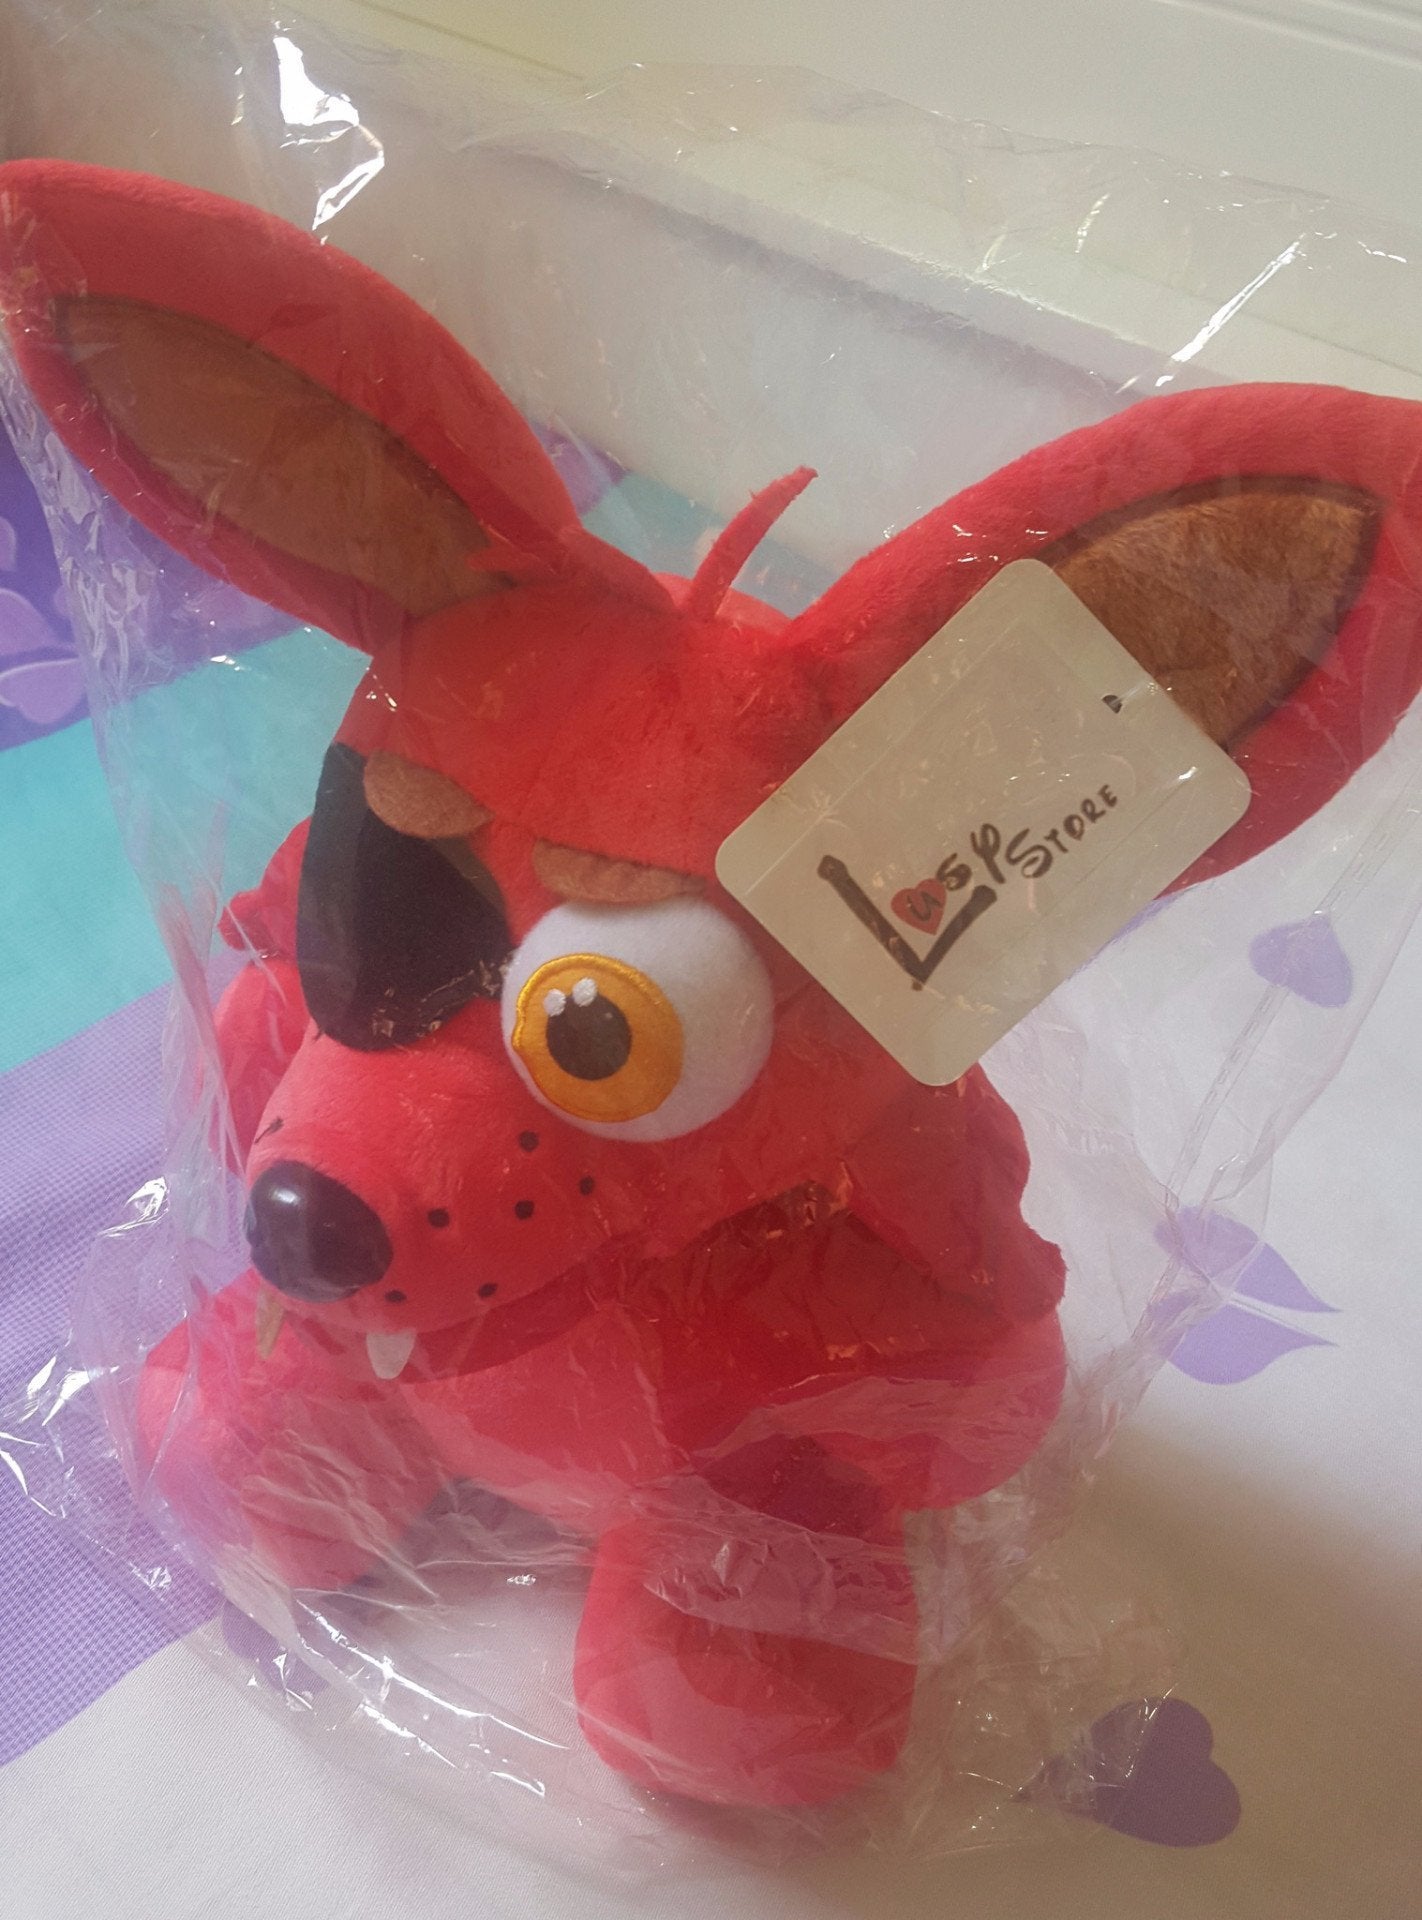 Laruokivi FNAF Foxy Plush Toy 10'' 25cm Figure